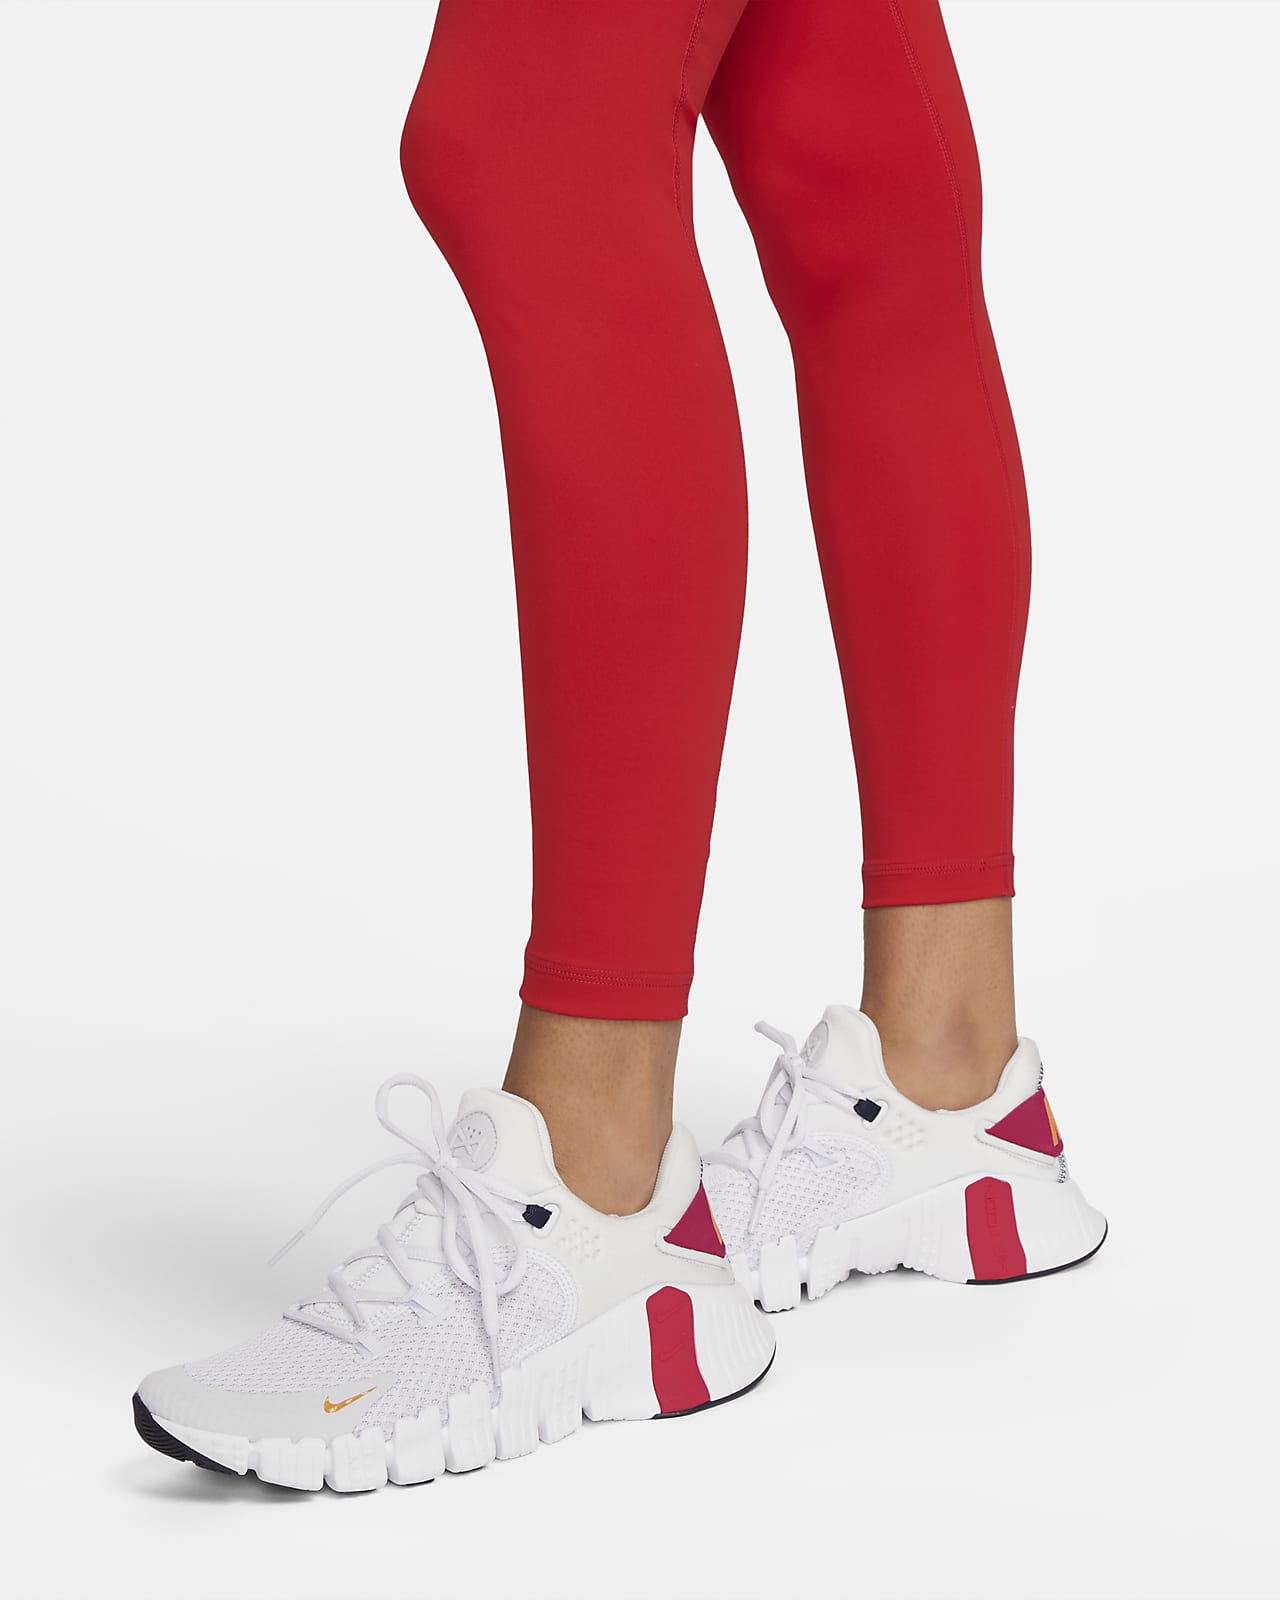 leggins deportivos nike – Compra leggins deportivos nike con envío